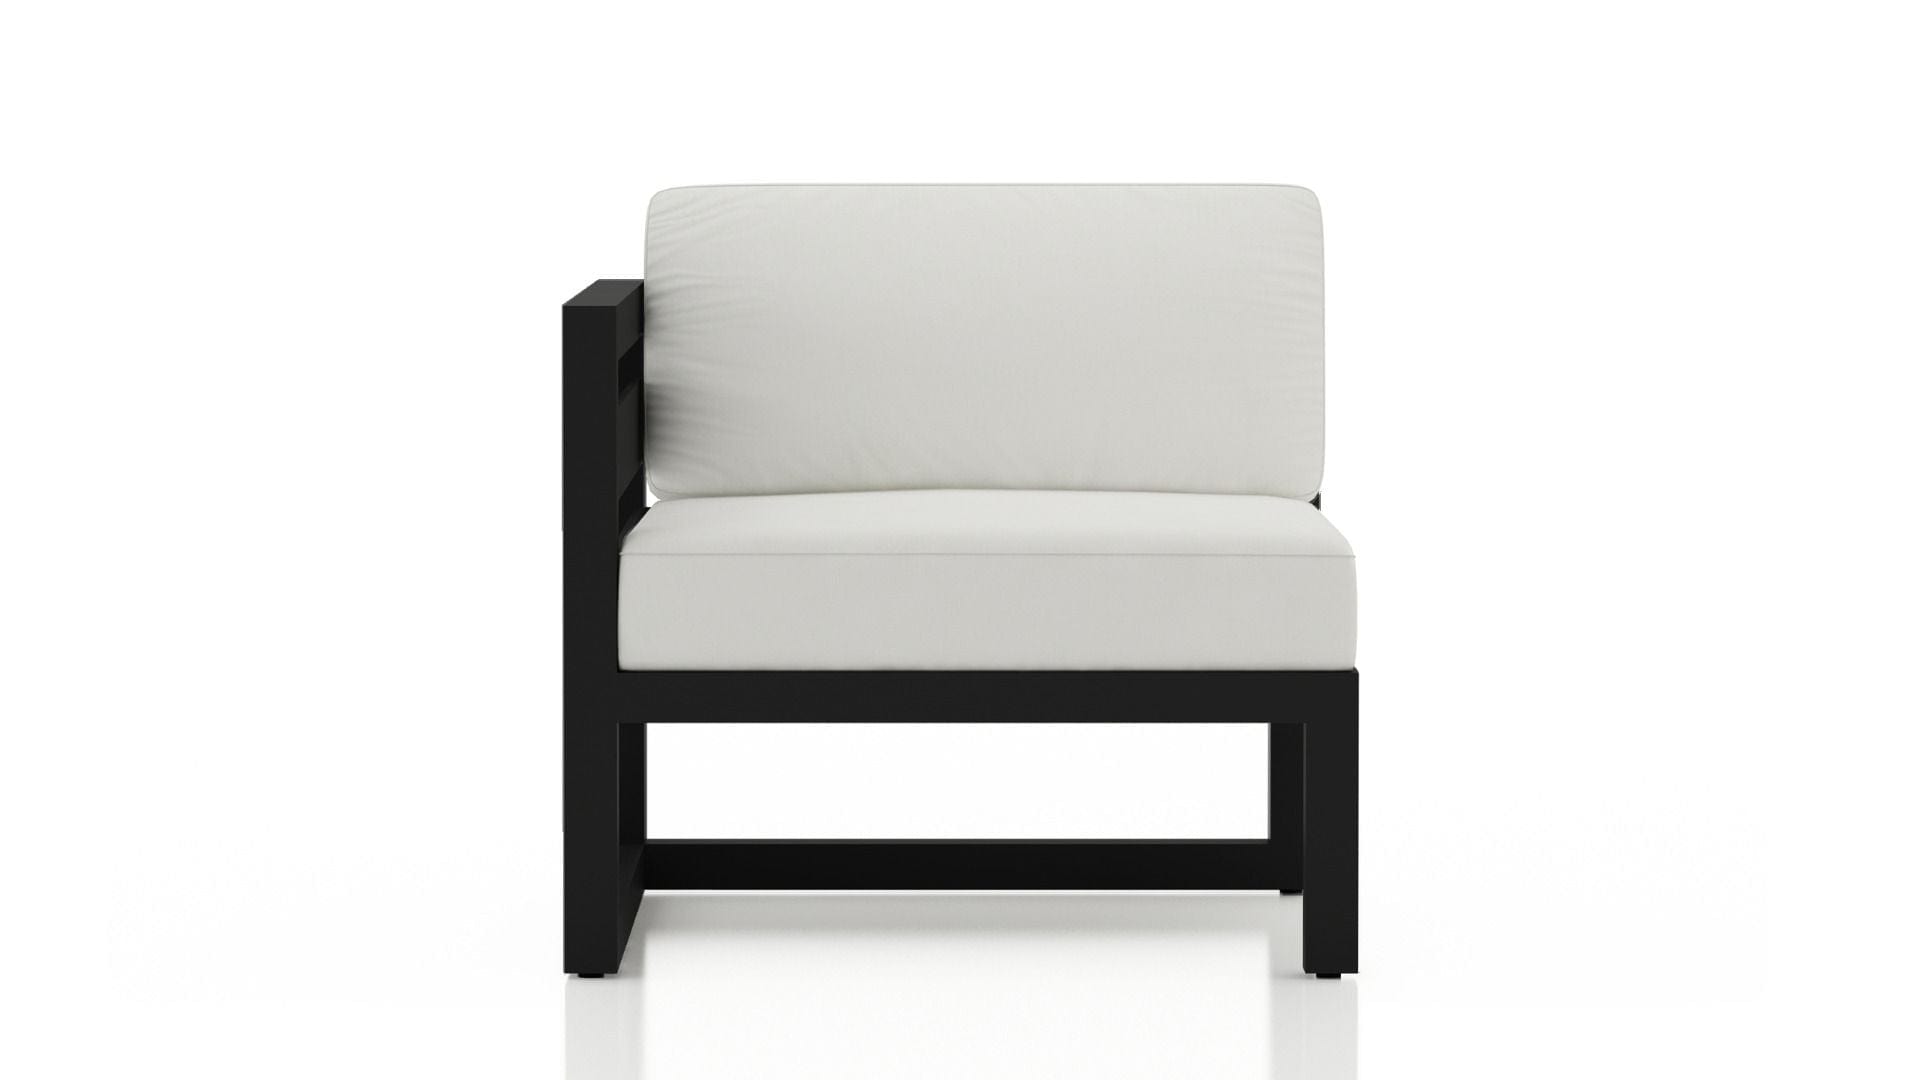 Harmonia Living Outdoor Furniture Harmonia Living - Avion Left Arm Section - Black | HL-AVN-BK-LAS